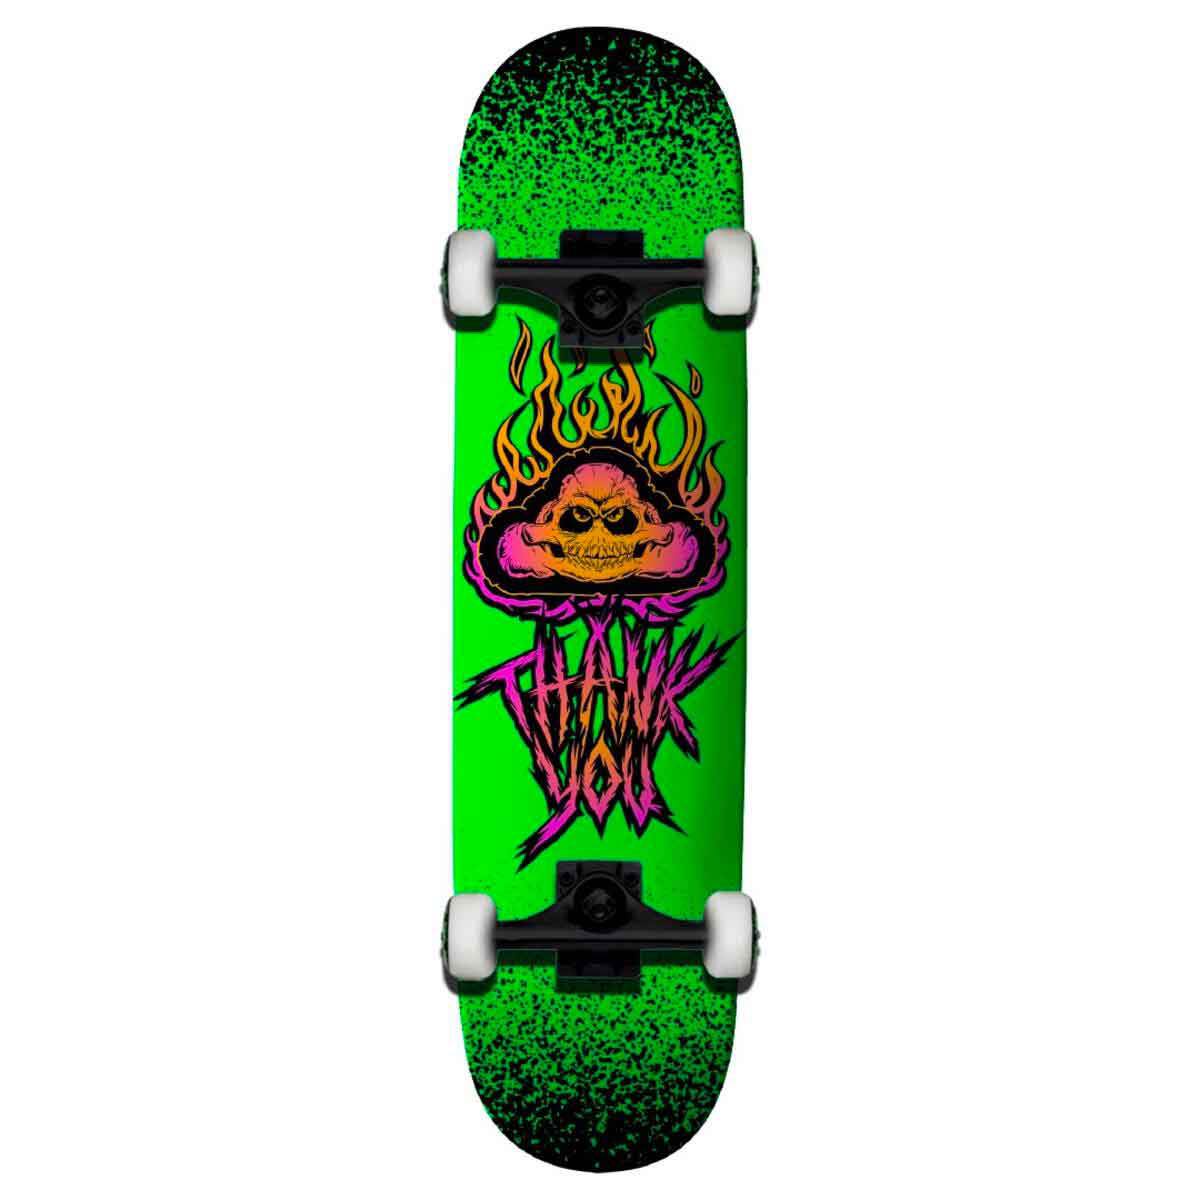 Thank You - Skateboard - Complete skateboards - Skull Cloud  7.75" (Neon) Complete Board